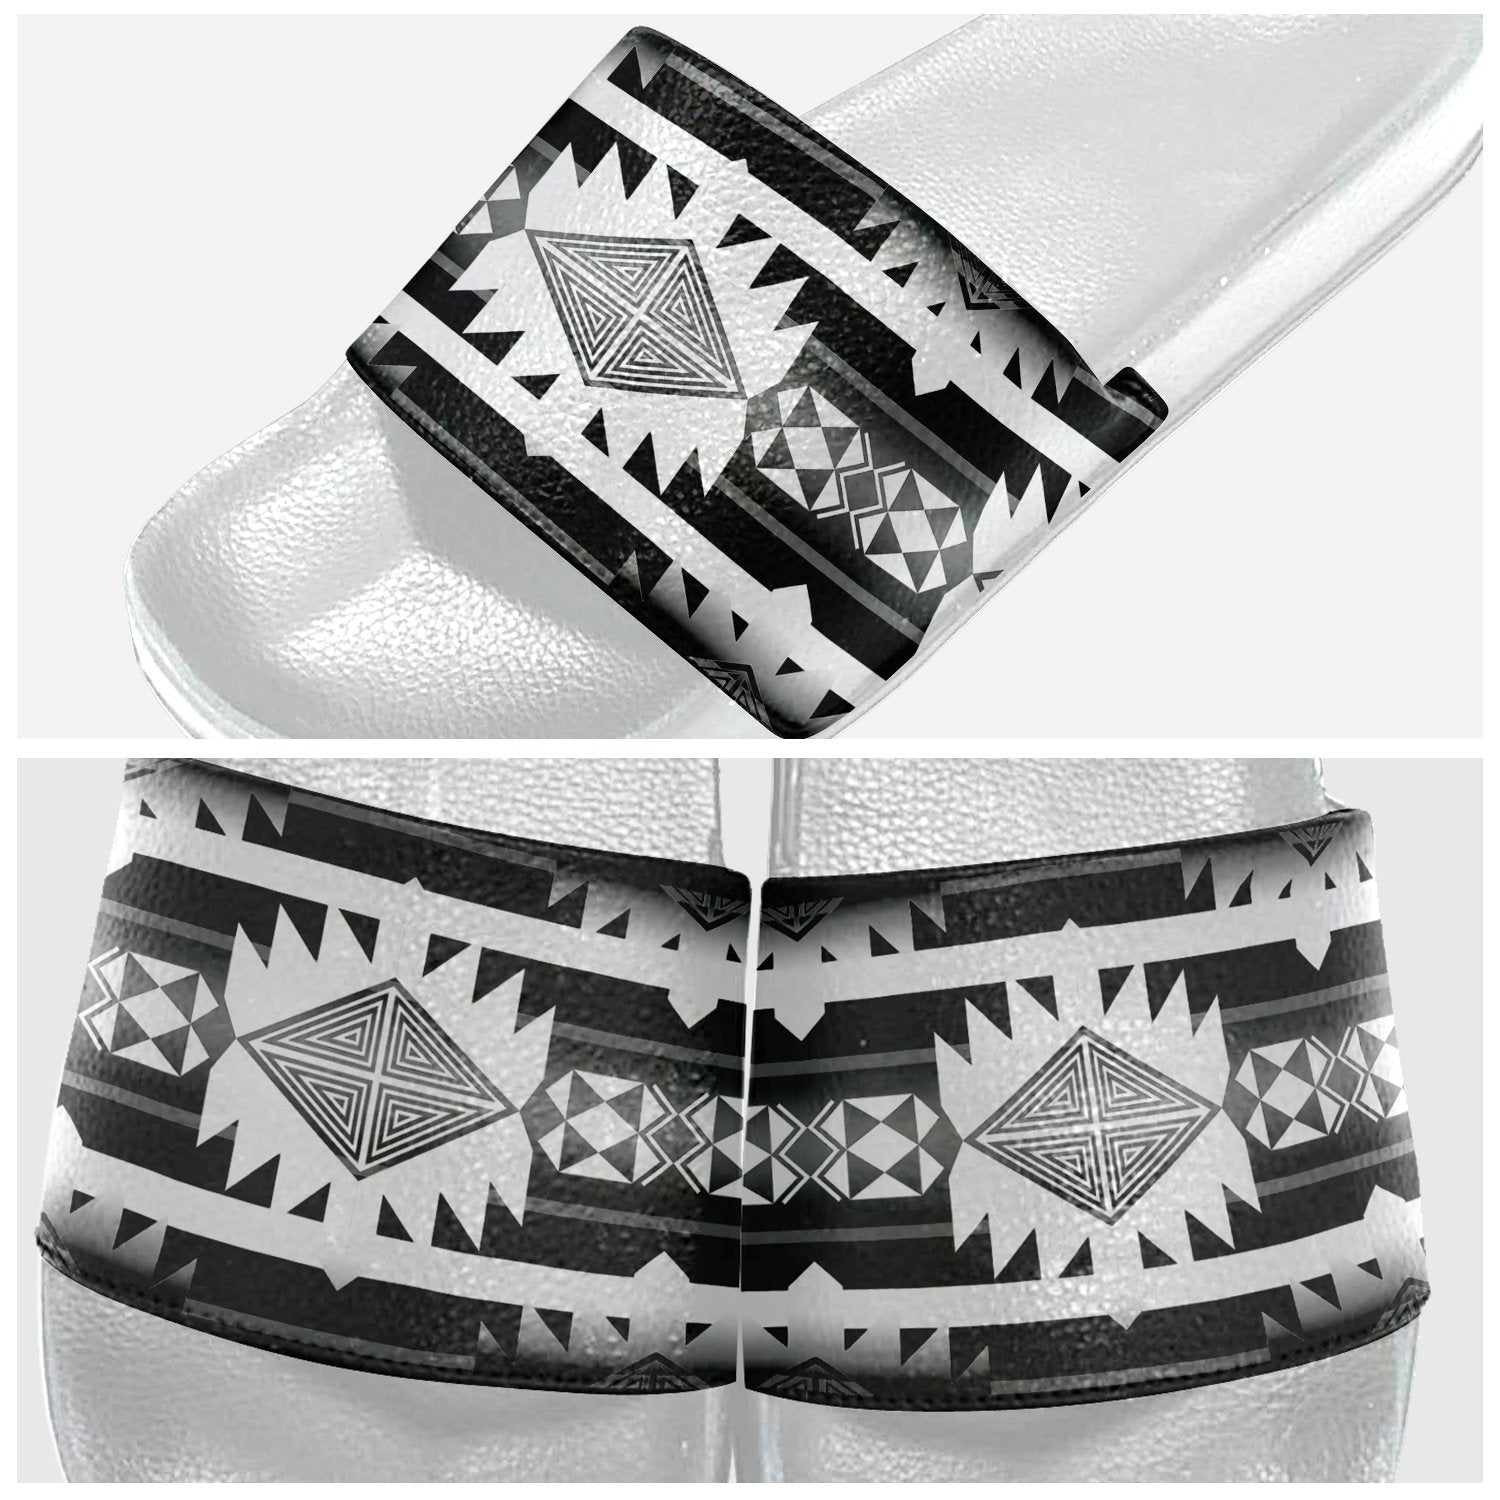 Okotoks Black and White Slide Sandals 49 Dzine 